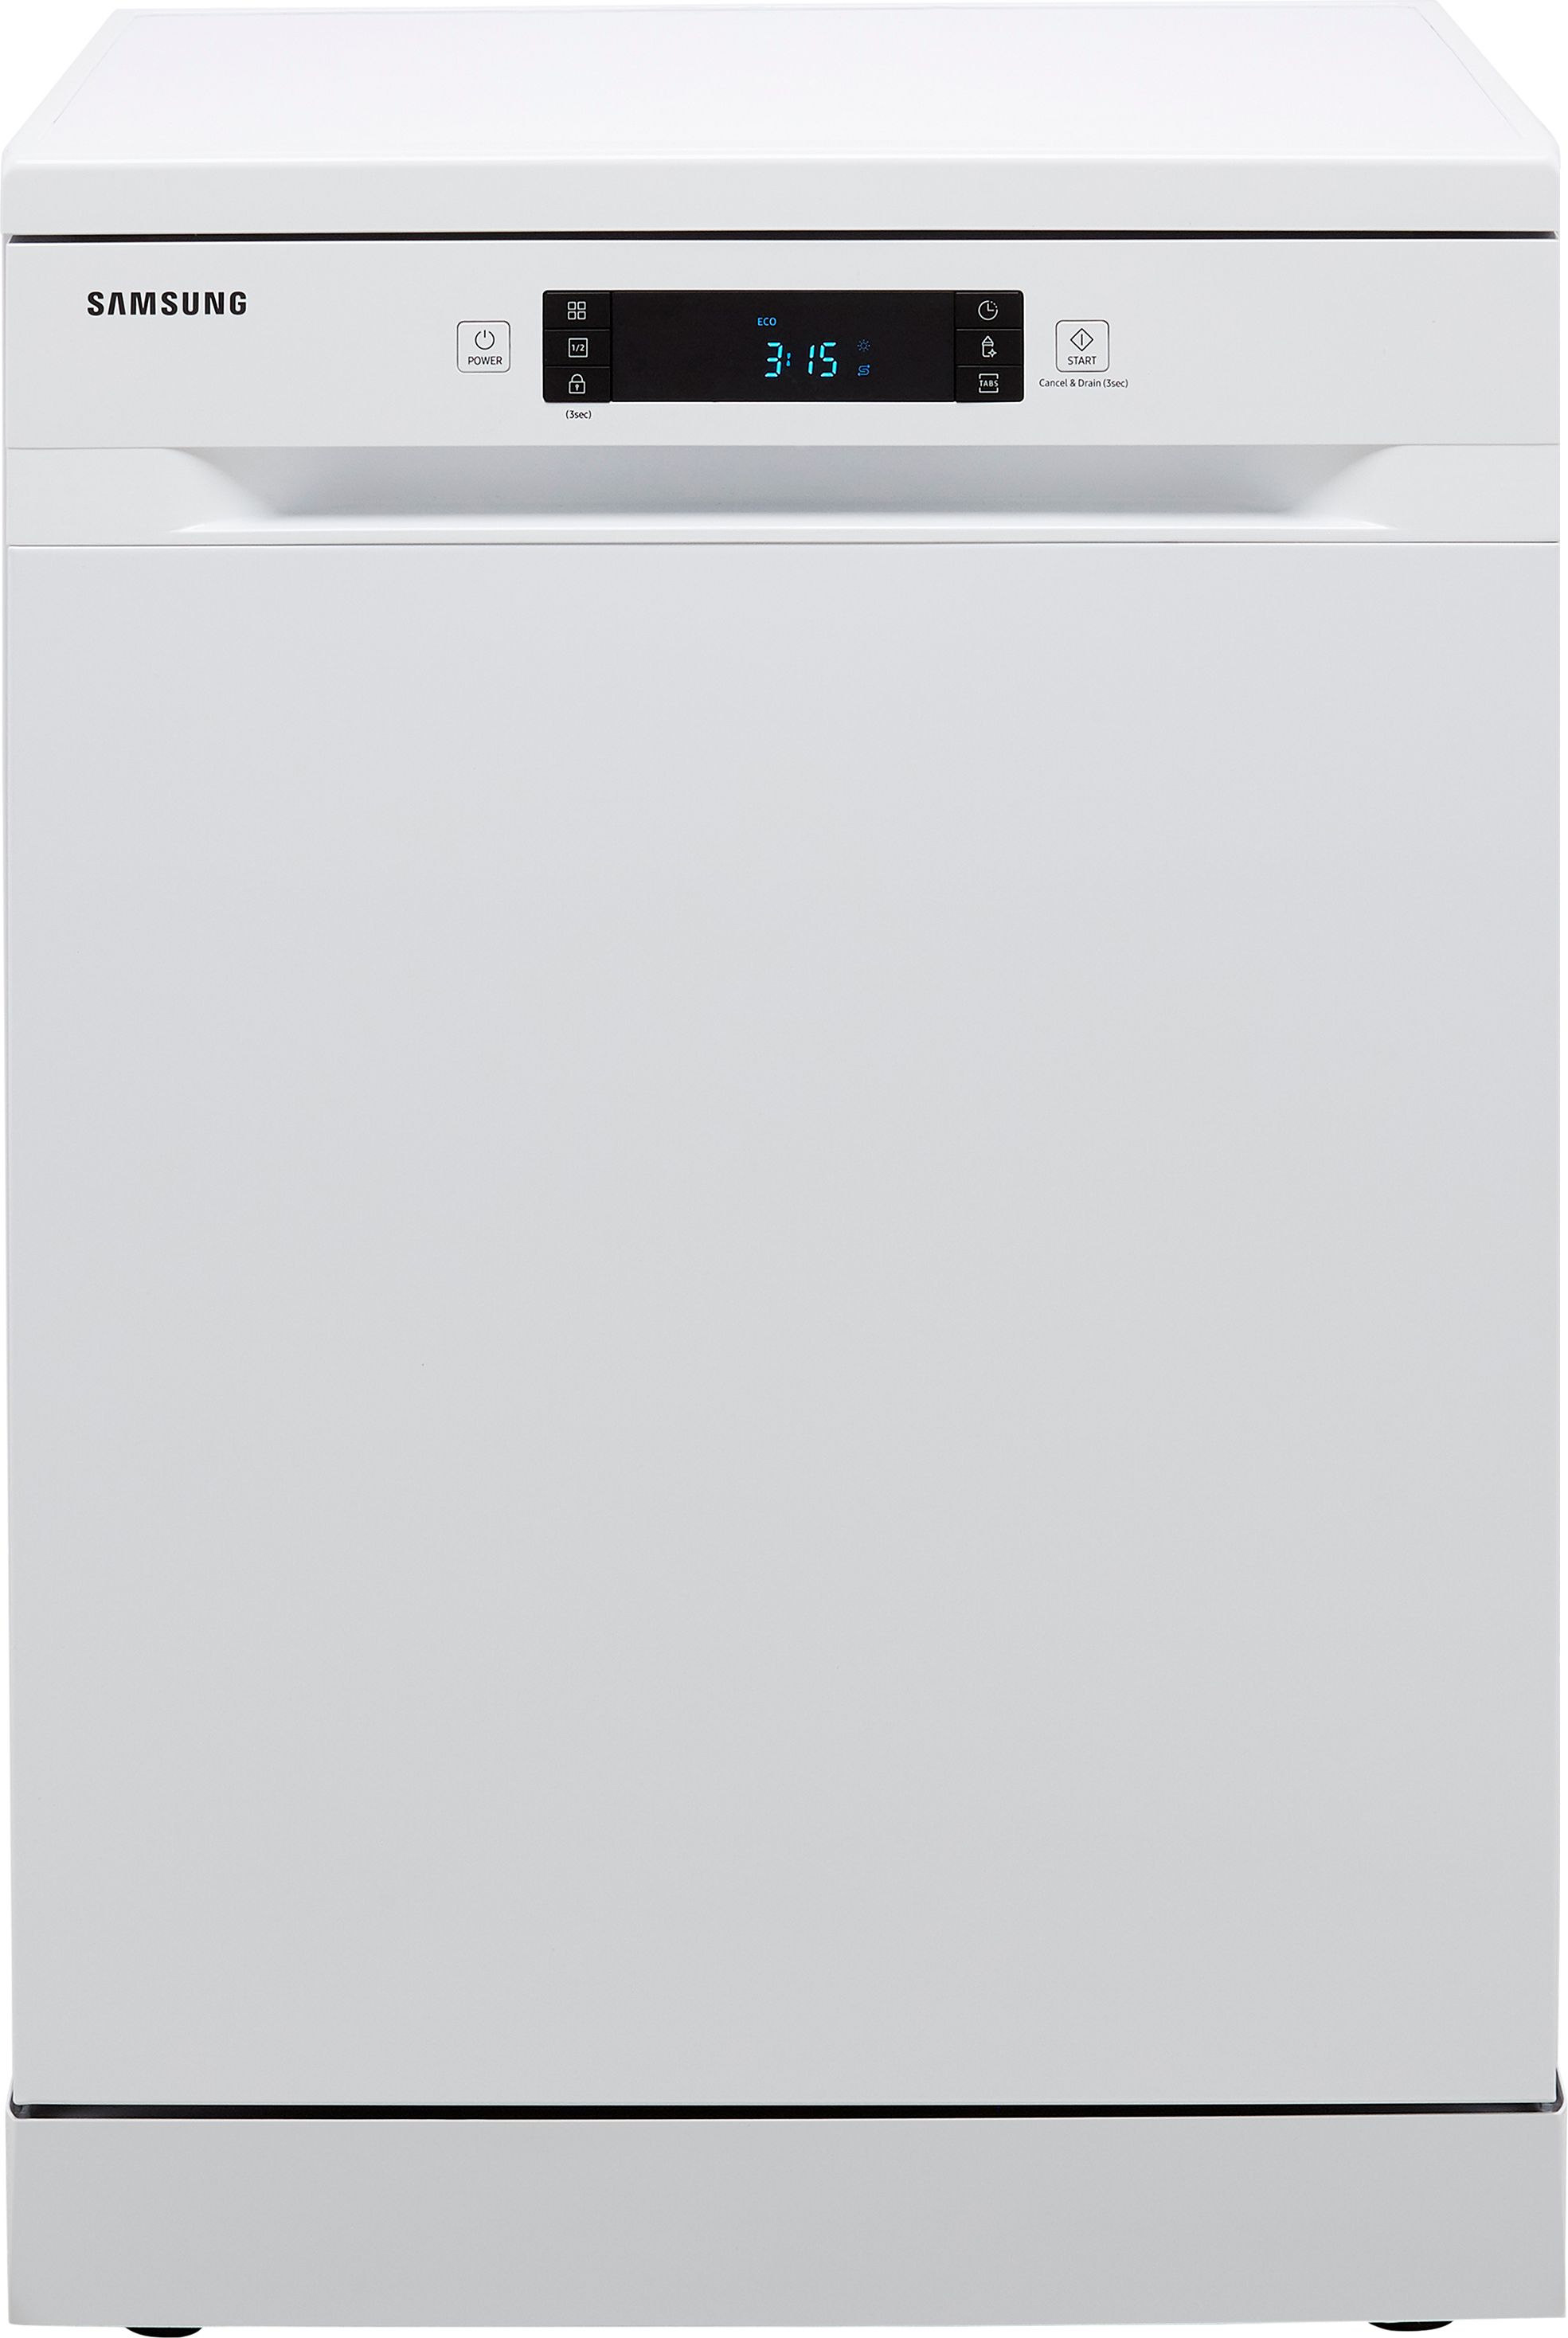 Samsung Series 5 DW60M5050FW Standard Dishwasher - White - F Rated, White